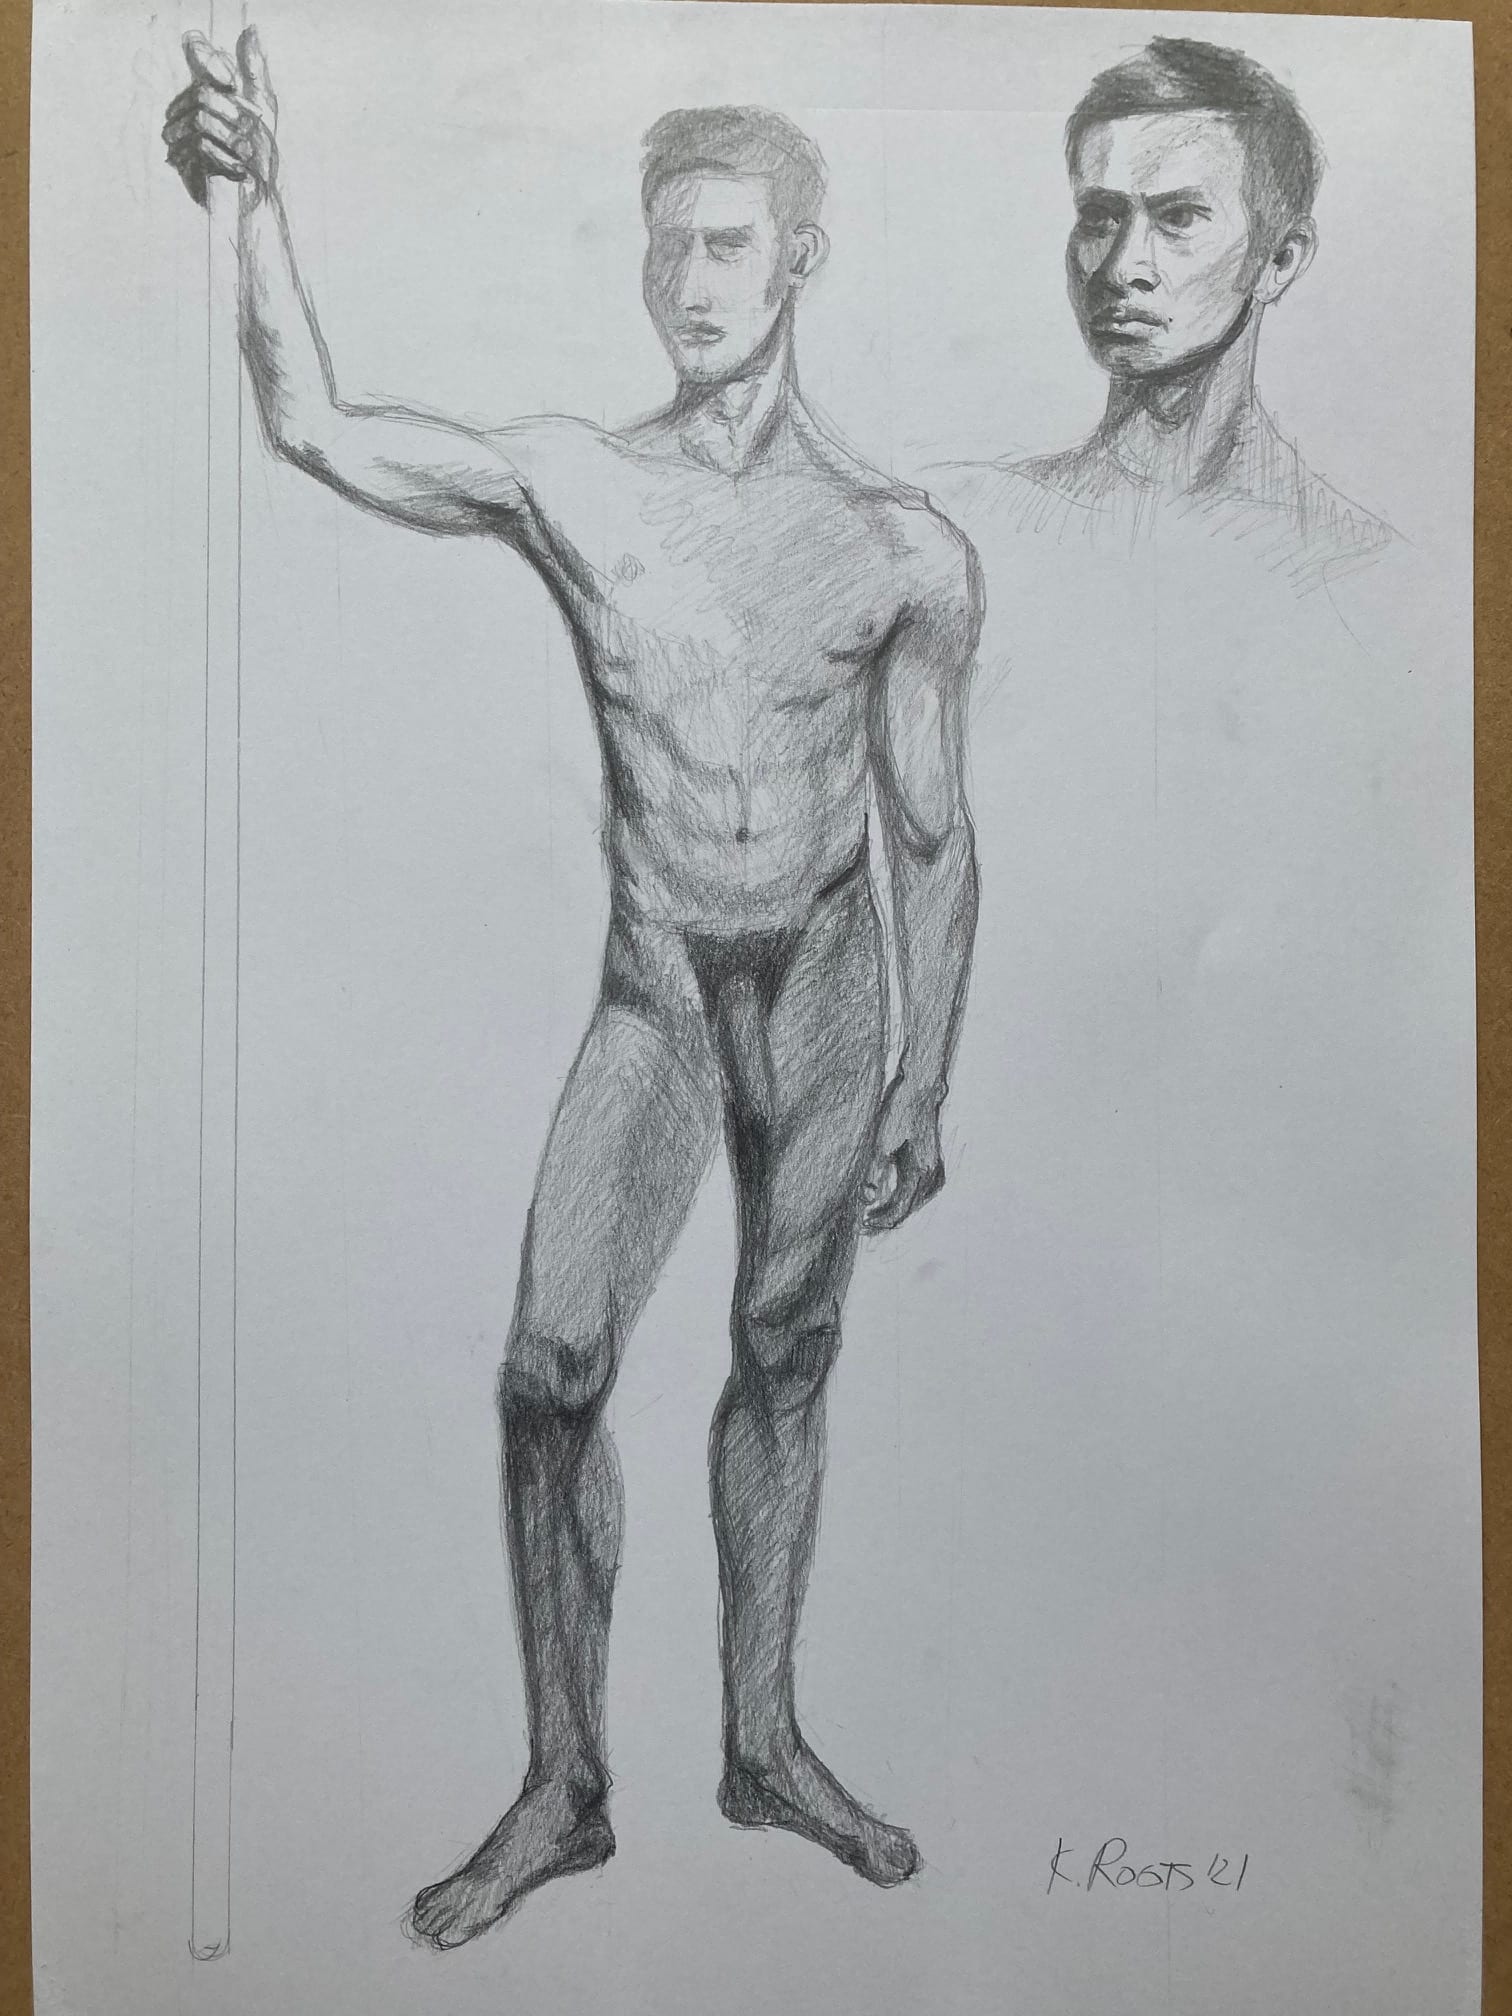 Drawing a human figure